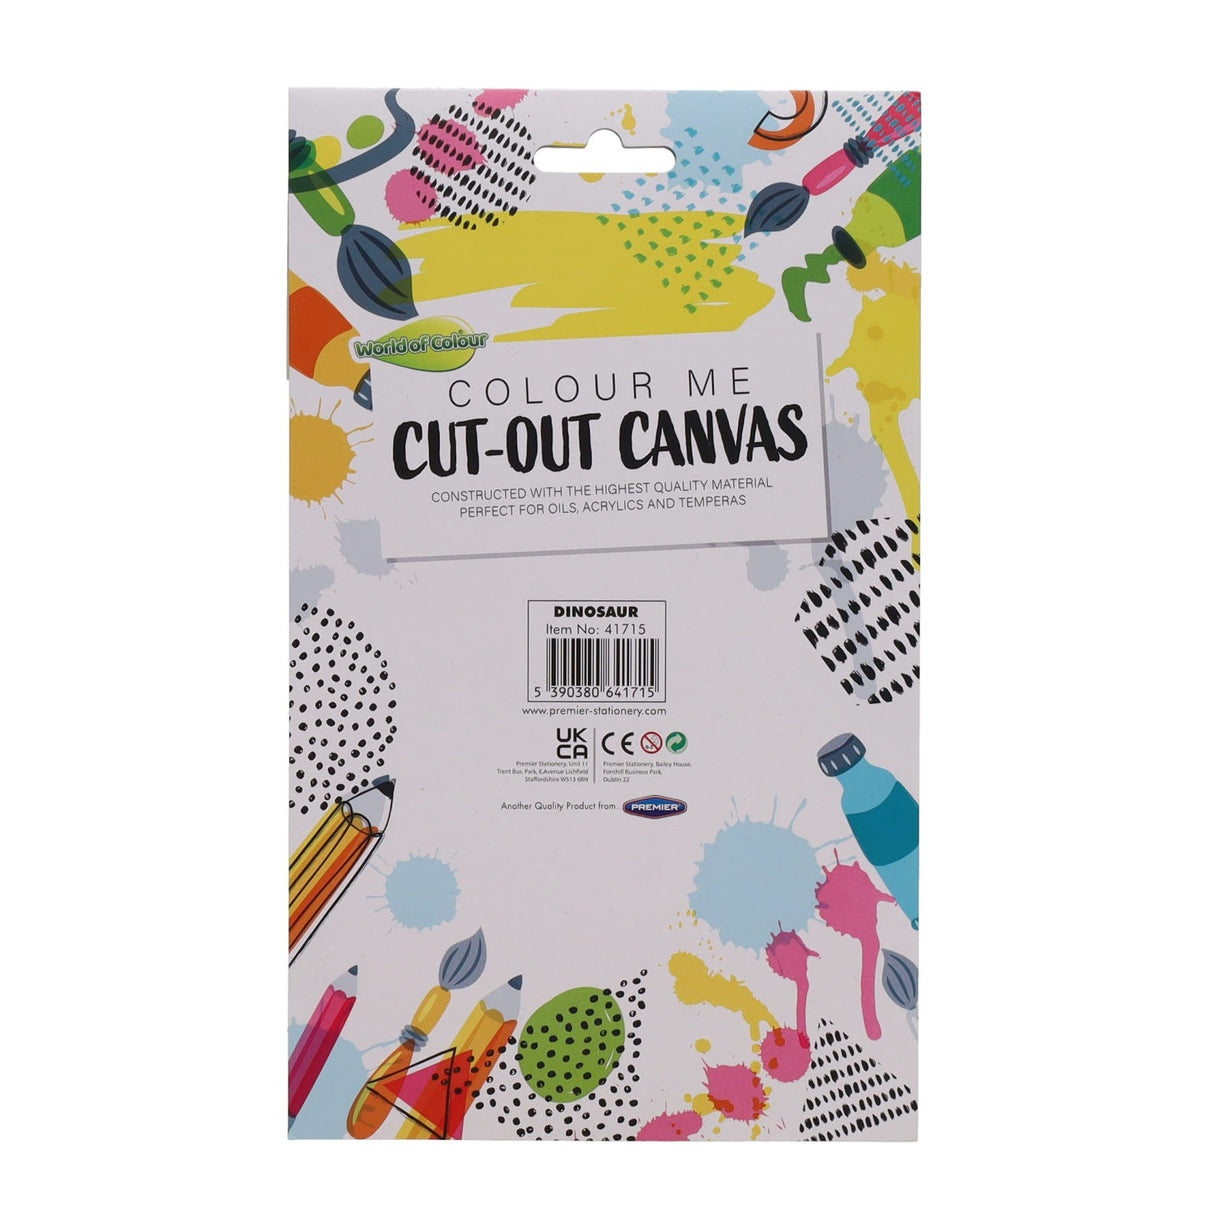 World of Colour Cut Out Canvas - Unicorn-Blank Canvas-World of Colour|StationeryShop.co.uk